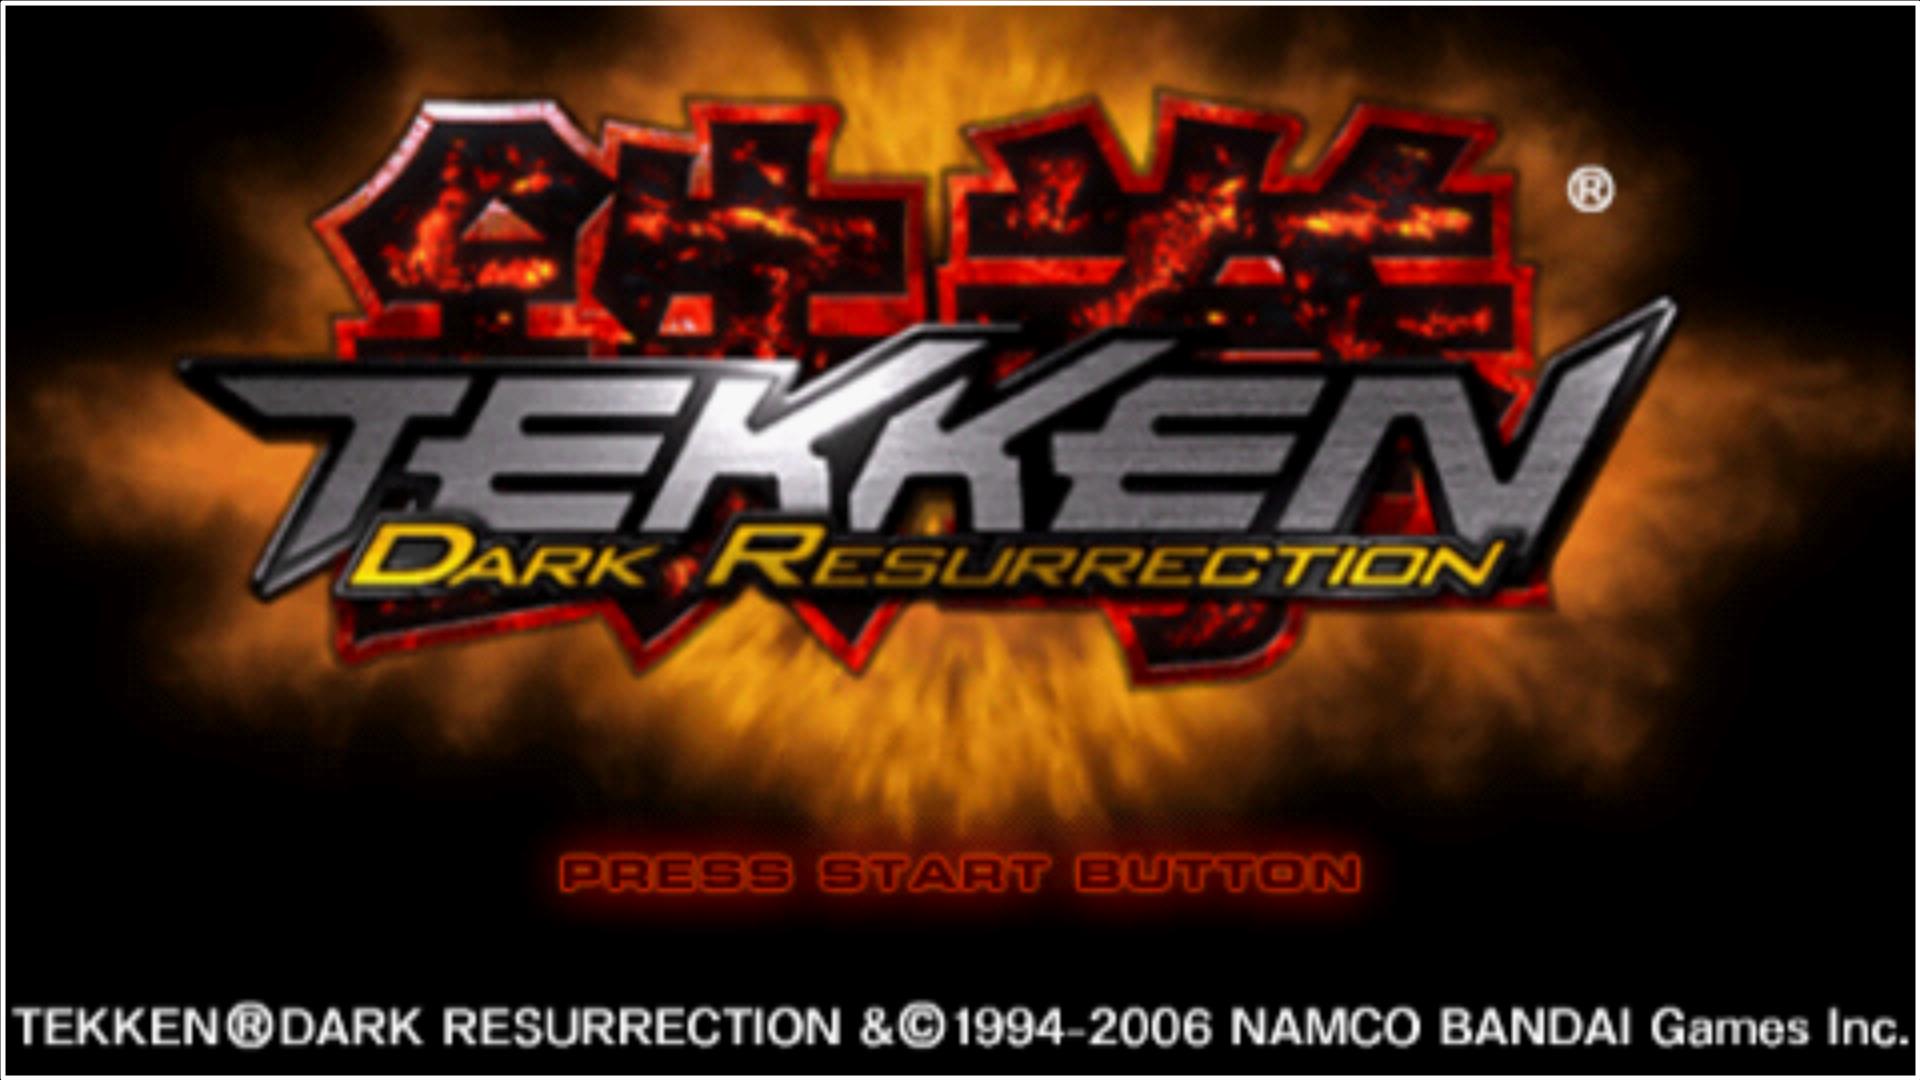 Ppsspp For Android - Tekken 5 dr rom click psp-roms.freeroms.com/psp_roms/popular/tekken_-_dark_resurrection.zip  and to download emulator click ppsspp.org/downloads.html